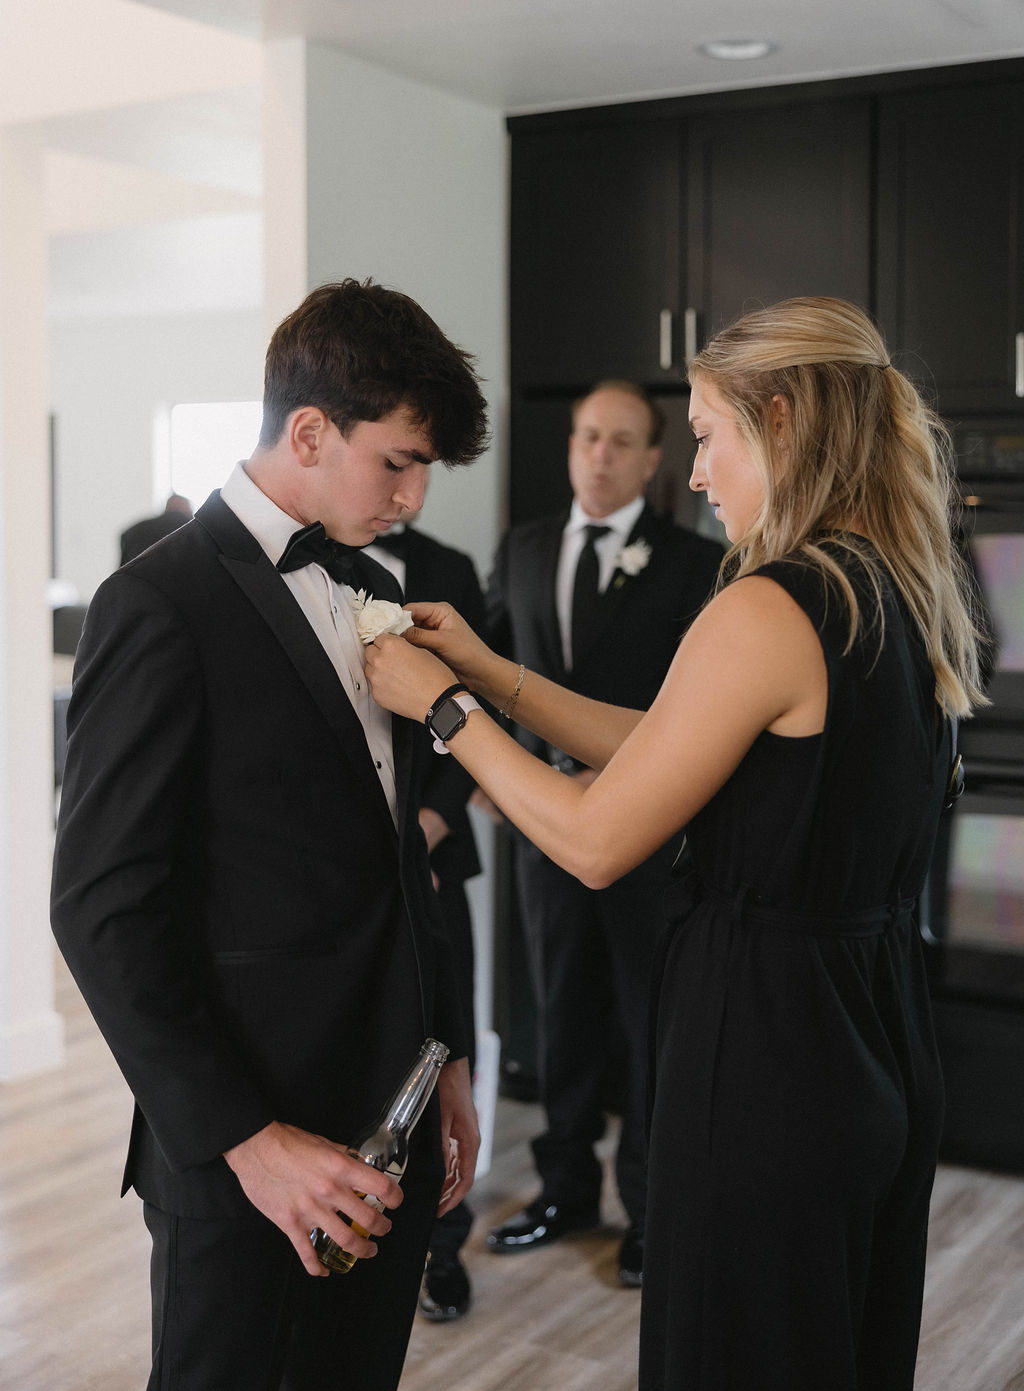 Wedding planner pinning boutonniere onto a groomsmen